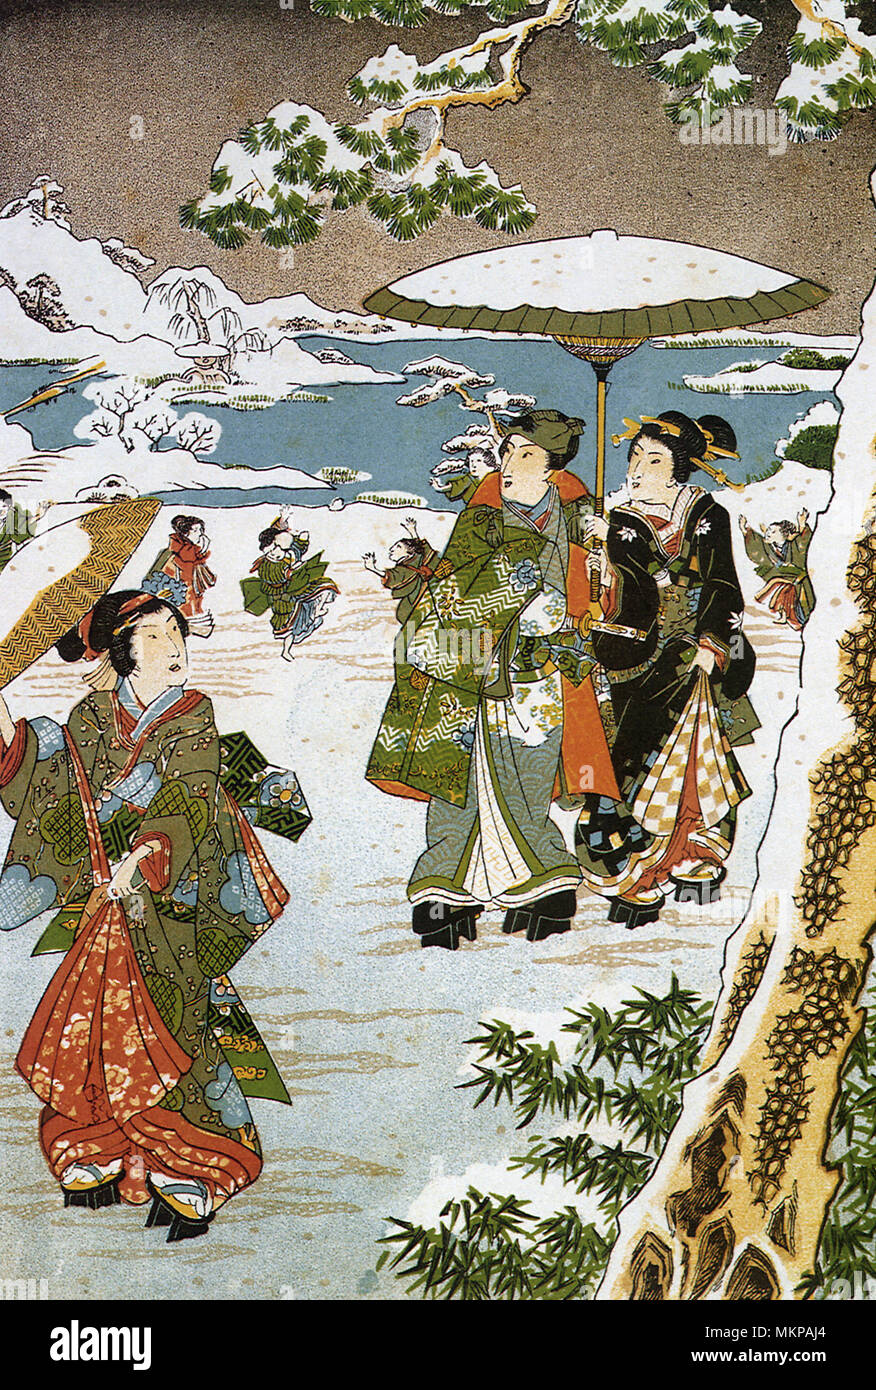 Japanese People in Formal Wear walk in Snow Stock Photo